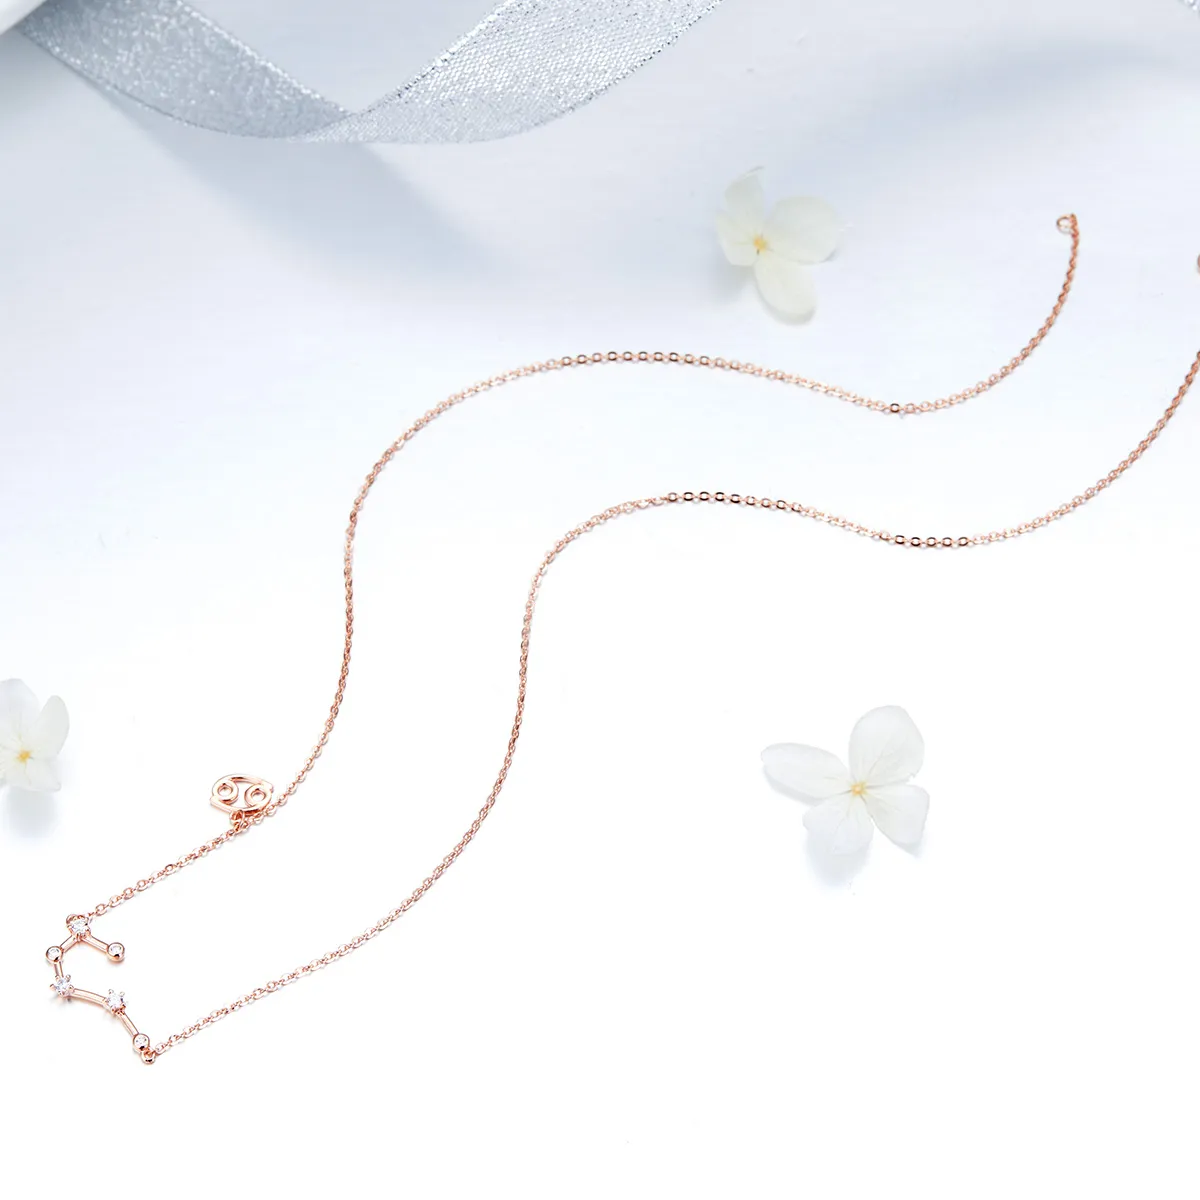 Pandora Style Cancer Necklace - BSN018